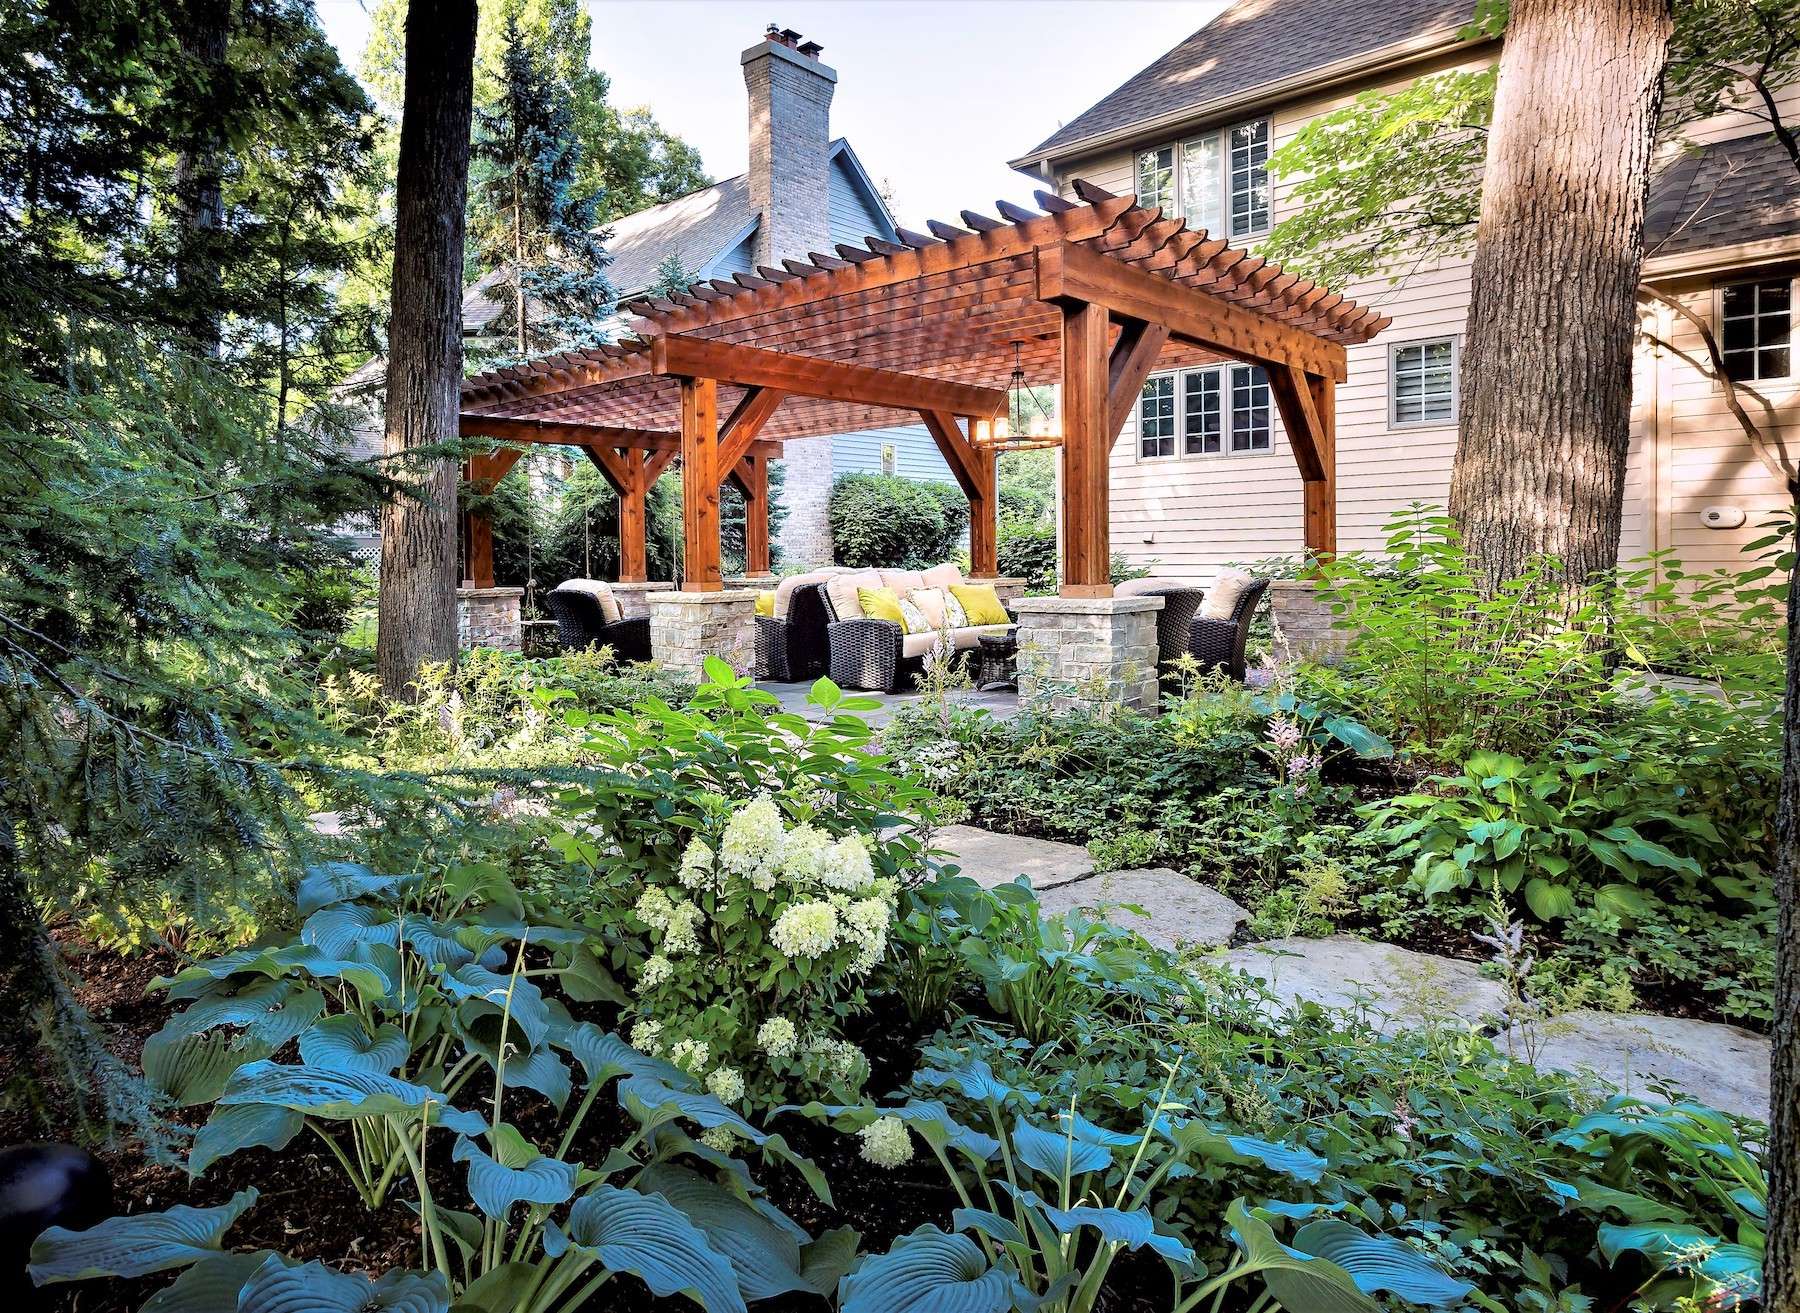 Where Should a Backyard Pergola be Placed? 7 Key Considerations